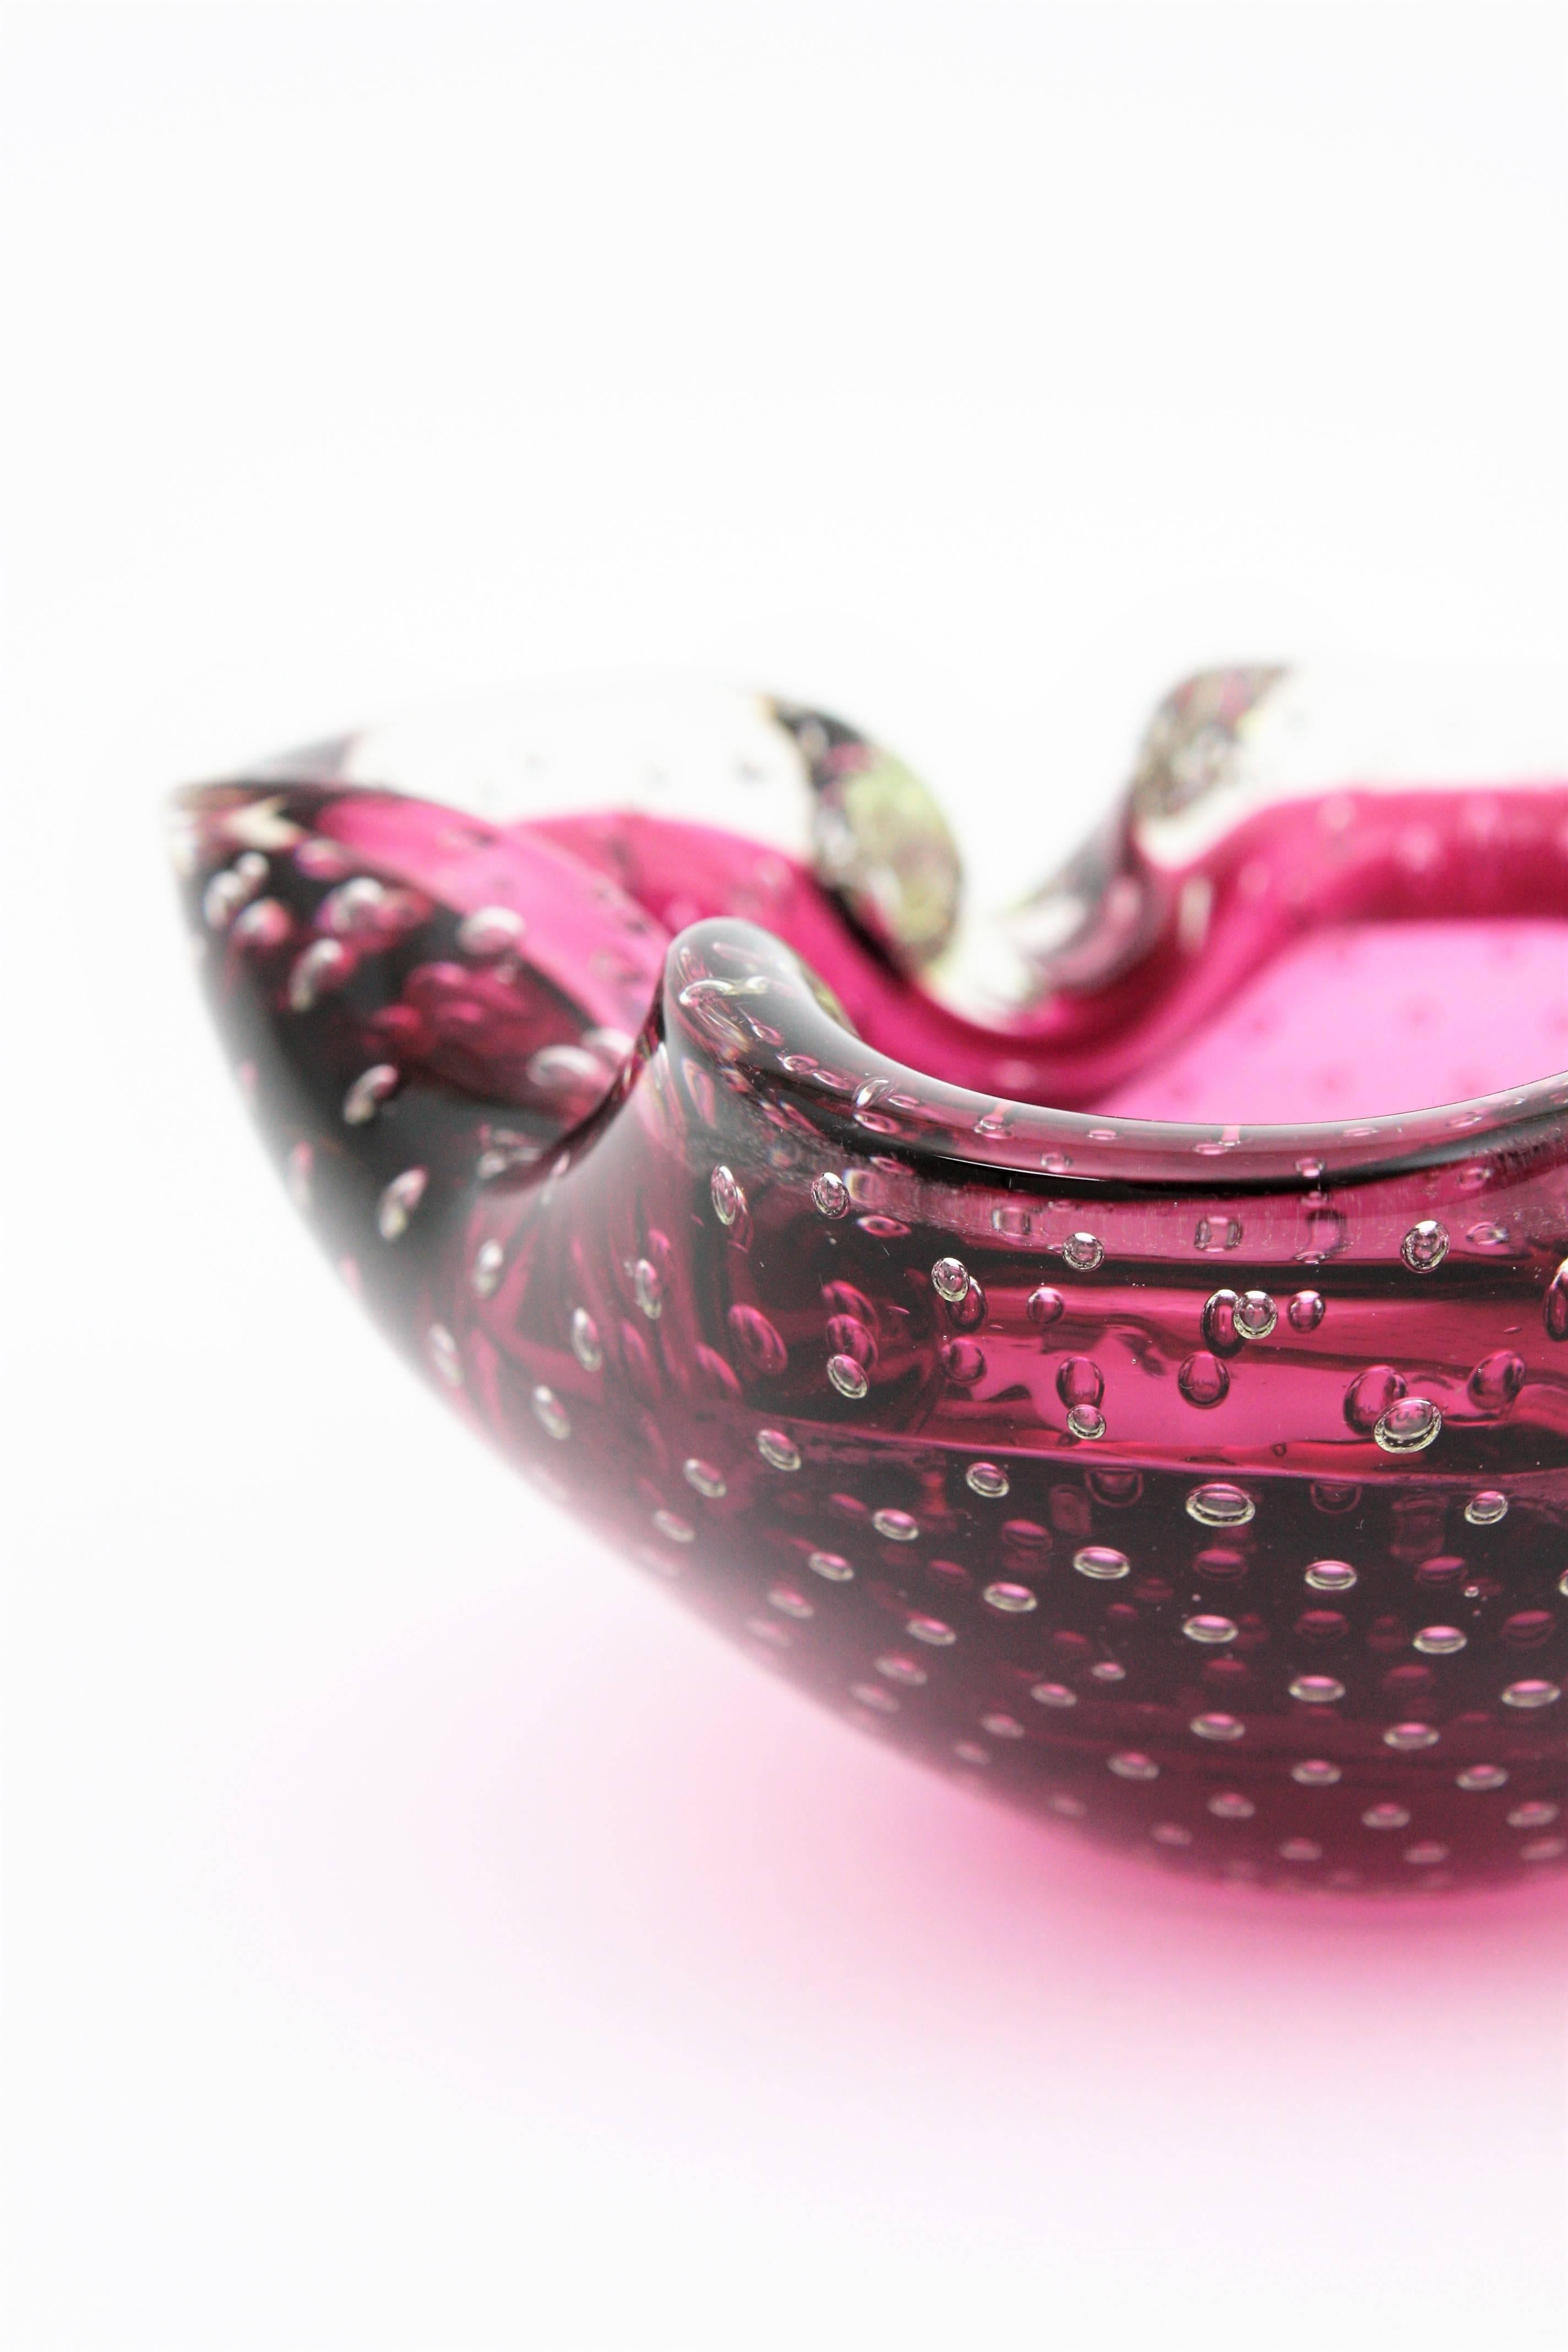 Archimede Seguso Pink Murano Sommerso Bullicante Glass Bowl / Ashtray, 1960s For Sale 3